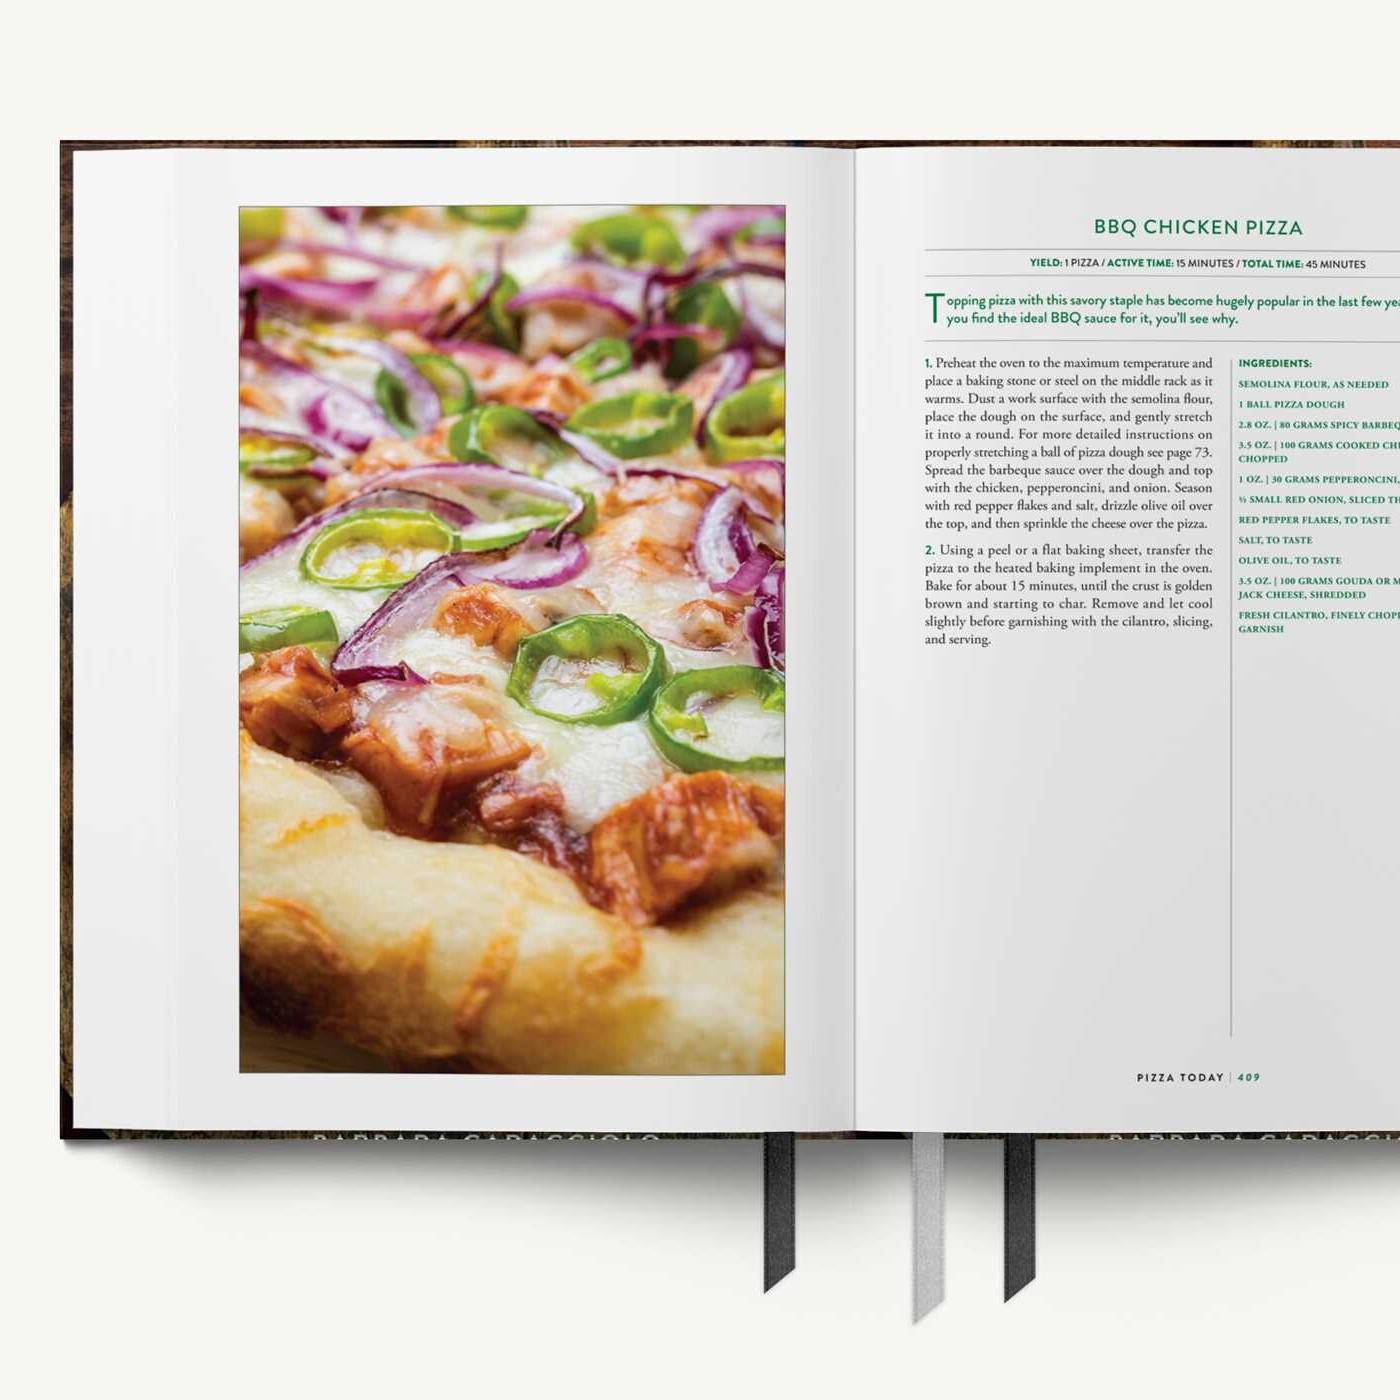 Book - Pizza: The Ultimate Cookbook